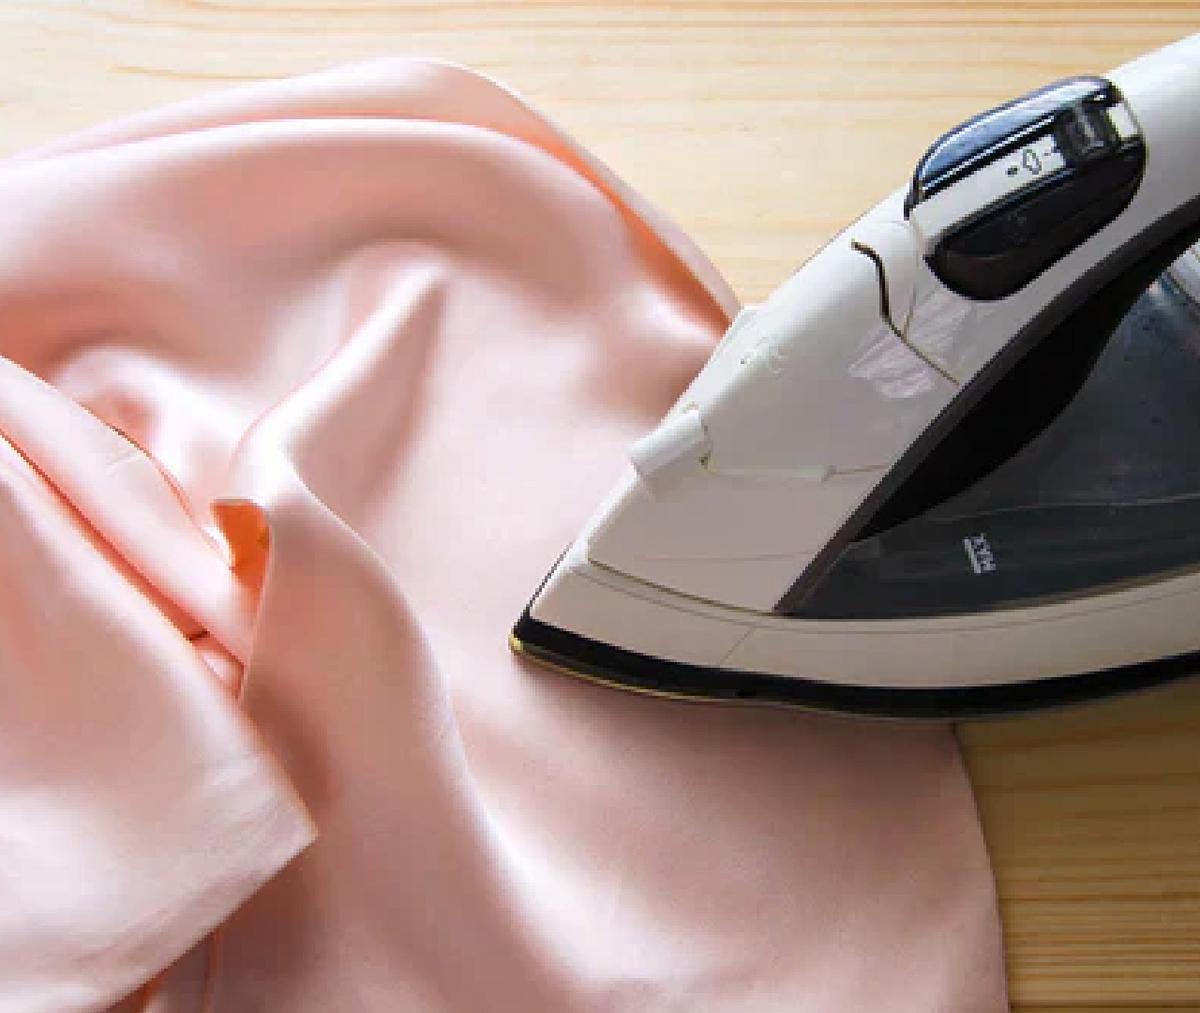 Silk dress ironing